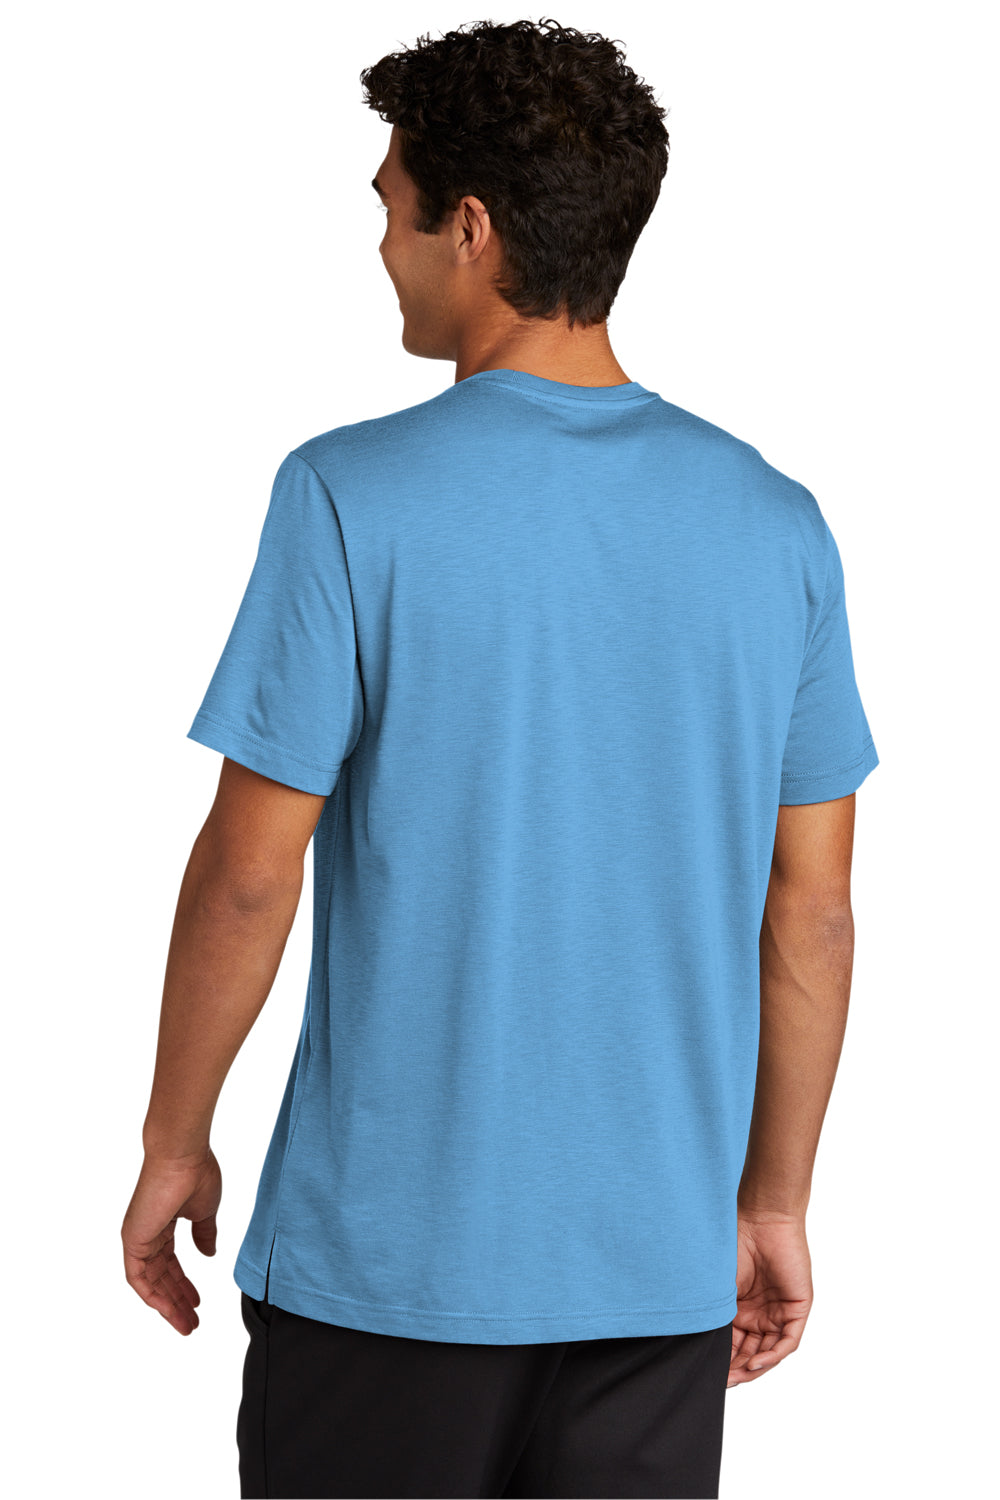 Sport-Tek Mens Strive Short Sleeve Crewneck T-Shirt Carolina Blue Side